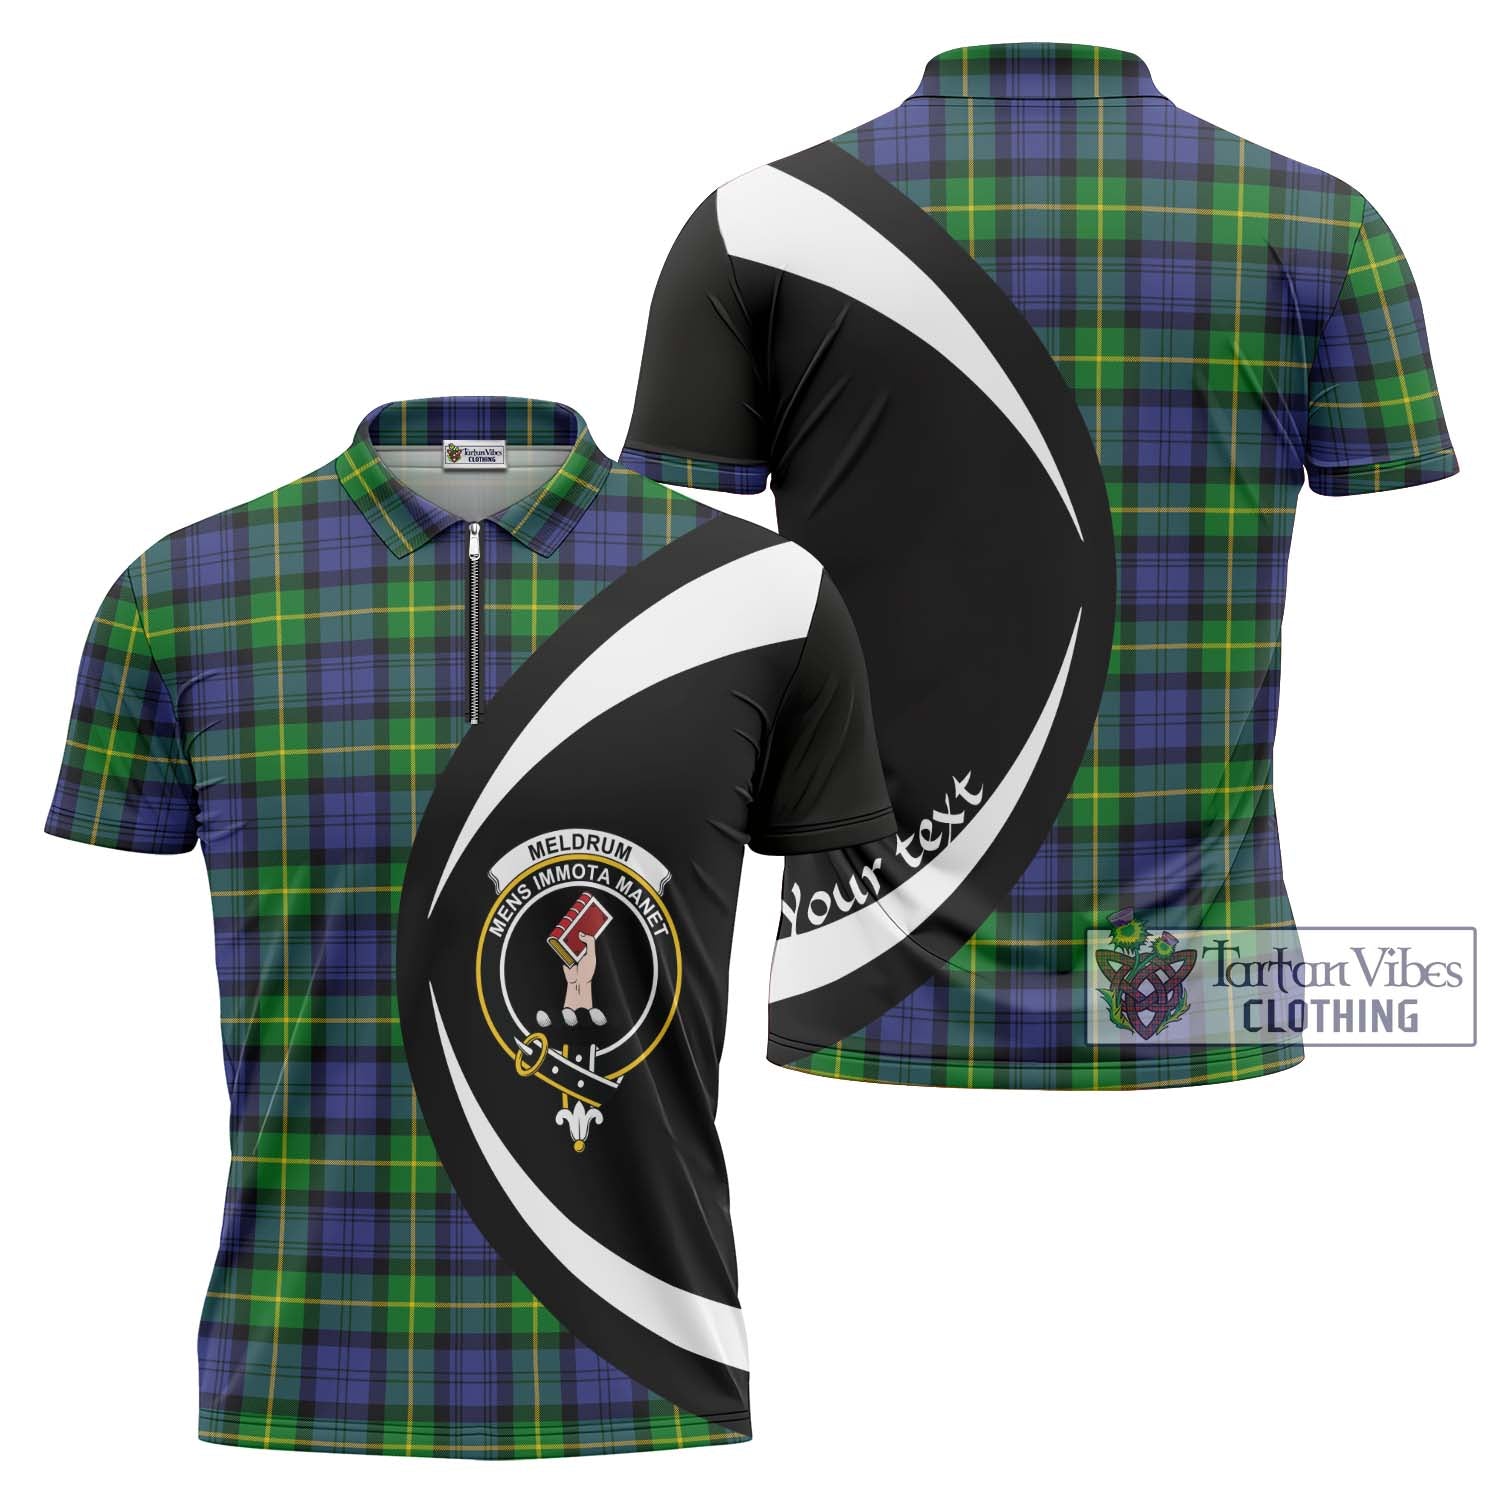 Tartan Vibes Clothing Meldrum Tartan Zipper Polo Shirt with Family Crest Circle Style